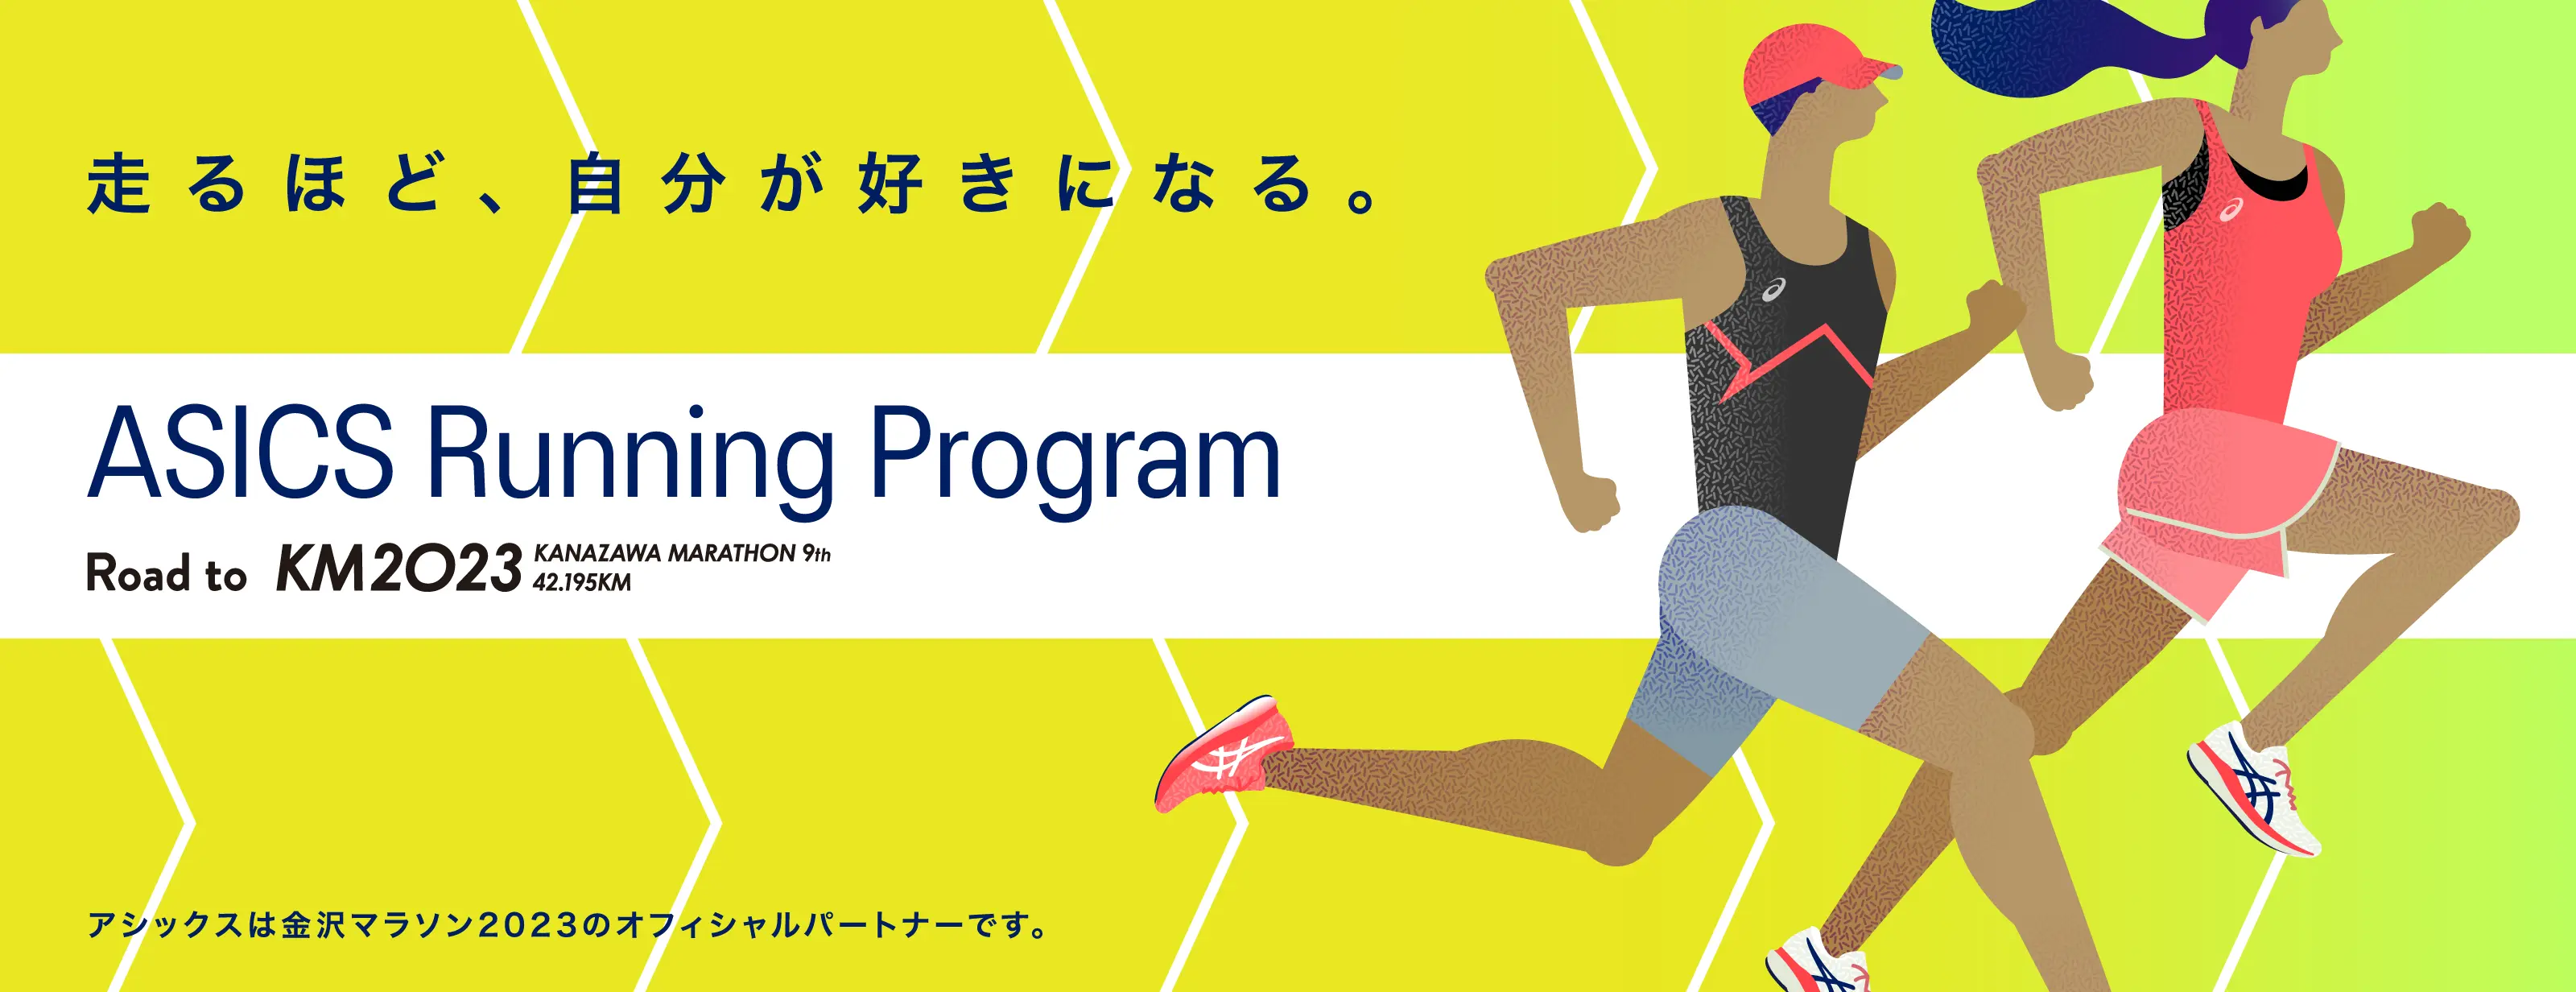 ASICS Running Program Road to 金沢マラソン2023 KV